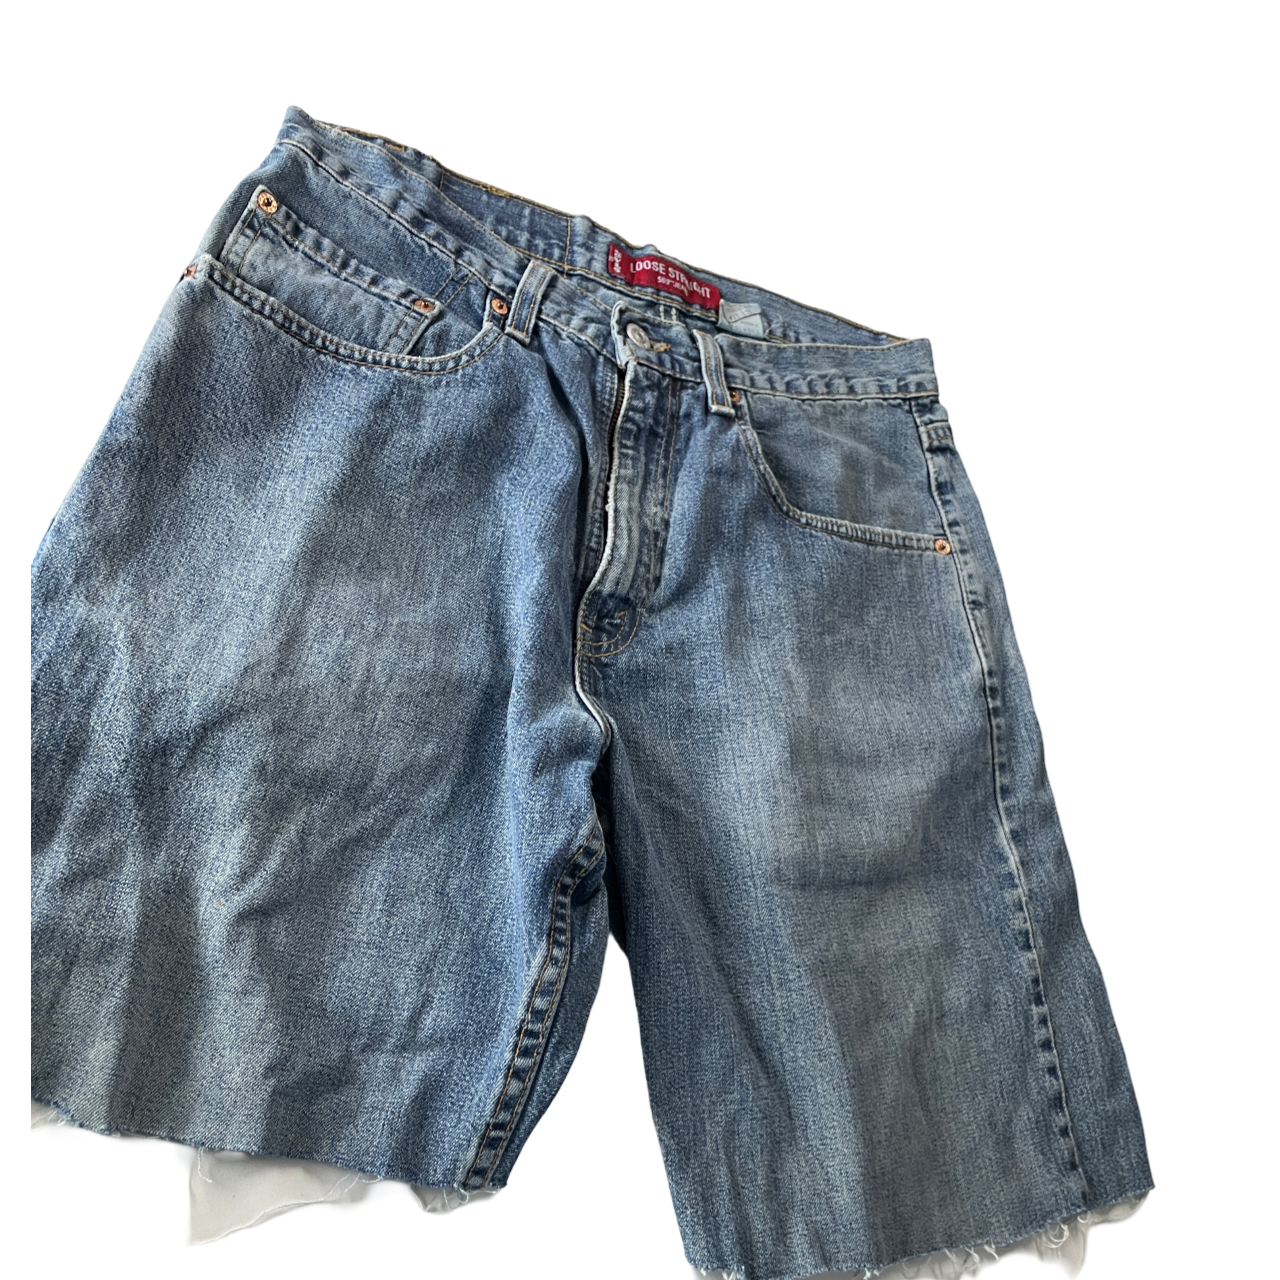 Levi's 569 Size 31 Waist, red Tab, Denim Shorts, Levi's shorts, High Rise Shorts, High Waist Shorts, &nbsp;Relaxed Fit, made in USA W 31 L 8 SKU 5168